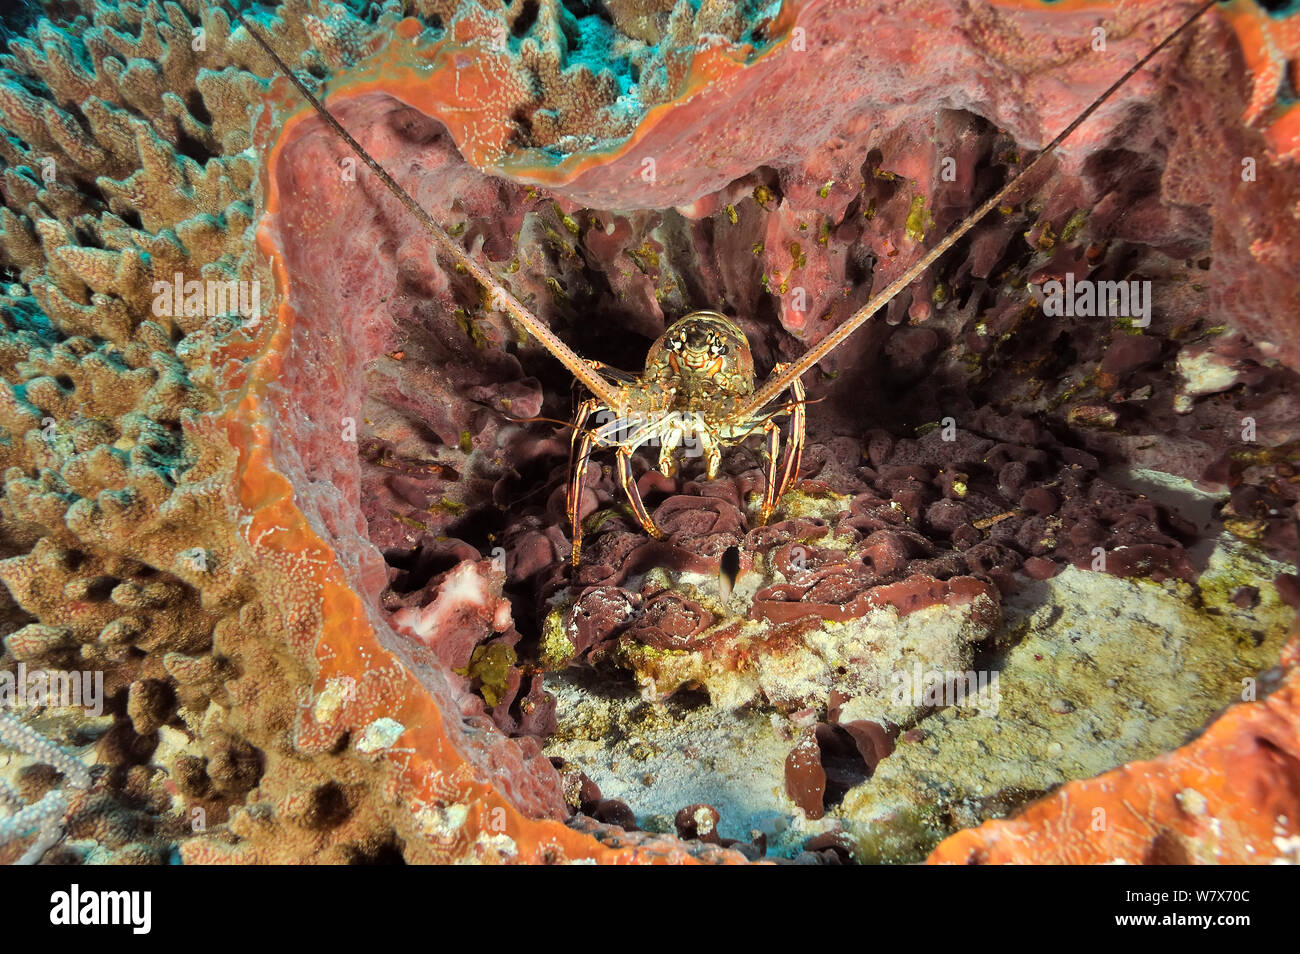 Langosta del caribe (Panulirus argus) en un gigante de la esponja Barril (Xestospongia muta), la isla de San Salvador / Colombus Island, Bahamas. Caribe. Foto de stock